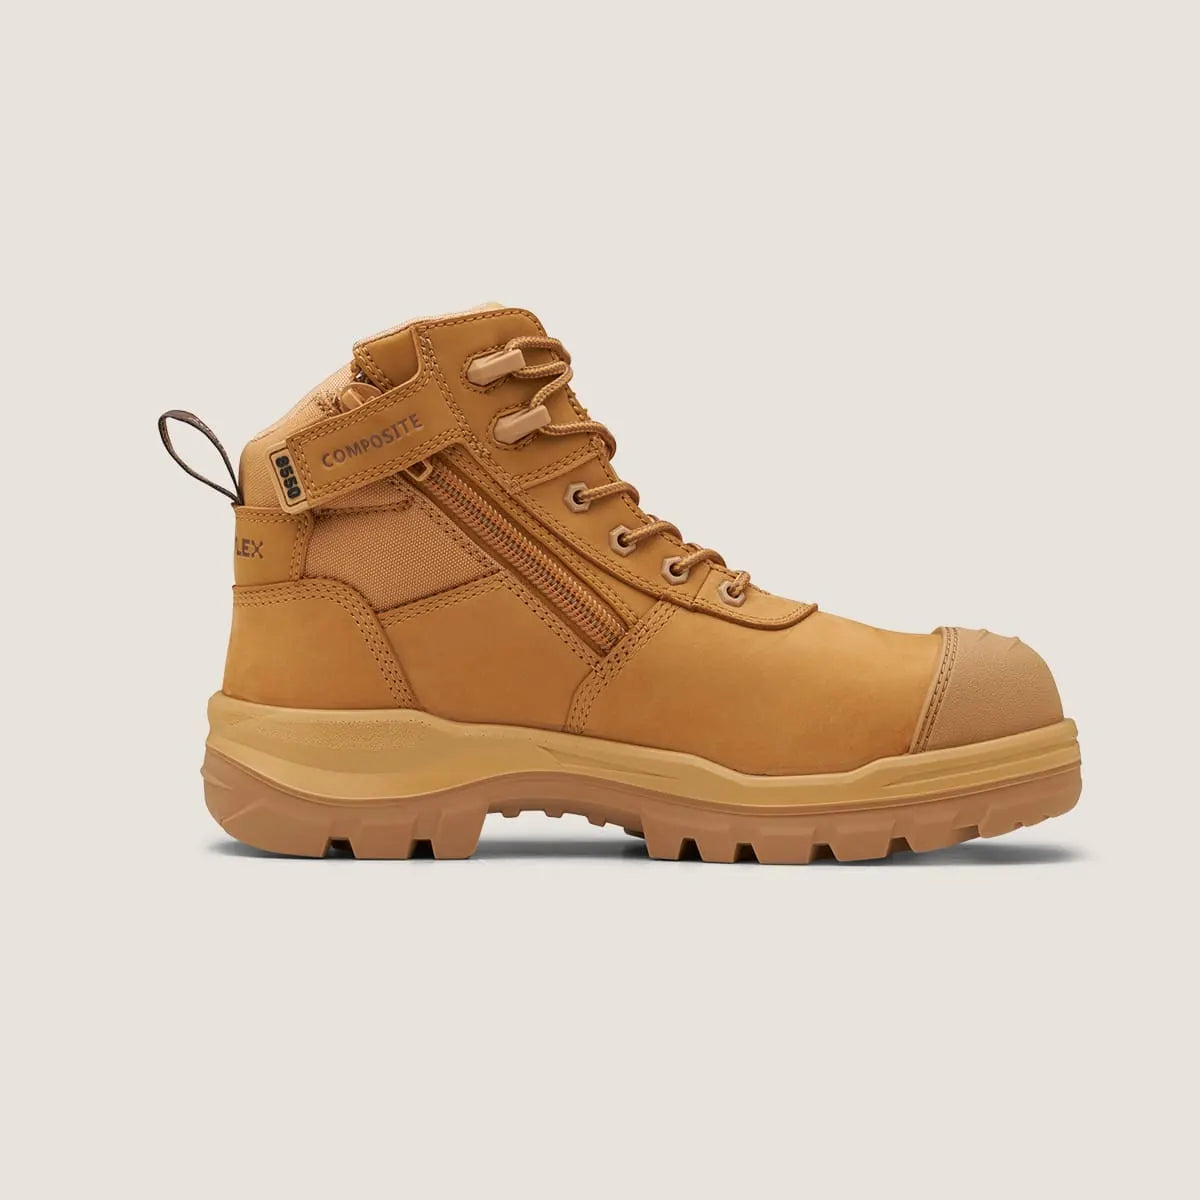 Blundstone 8550 Unisex Rotoflex Safety Boots-Wheat